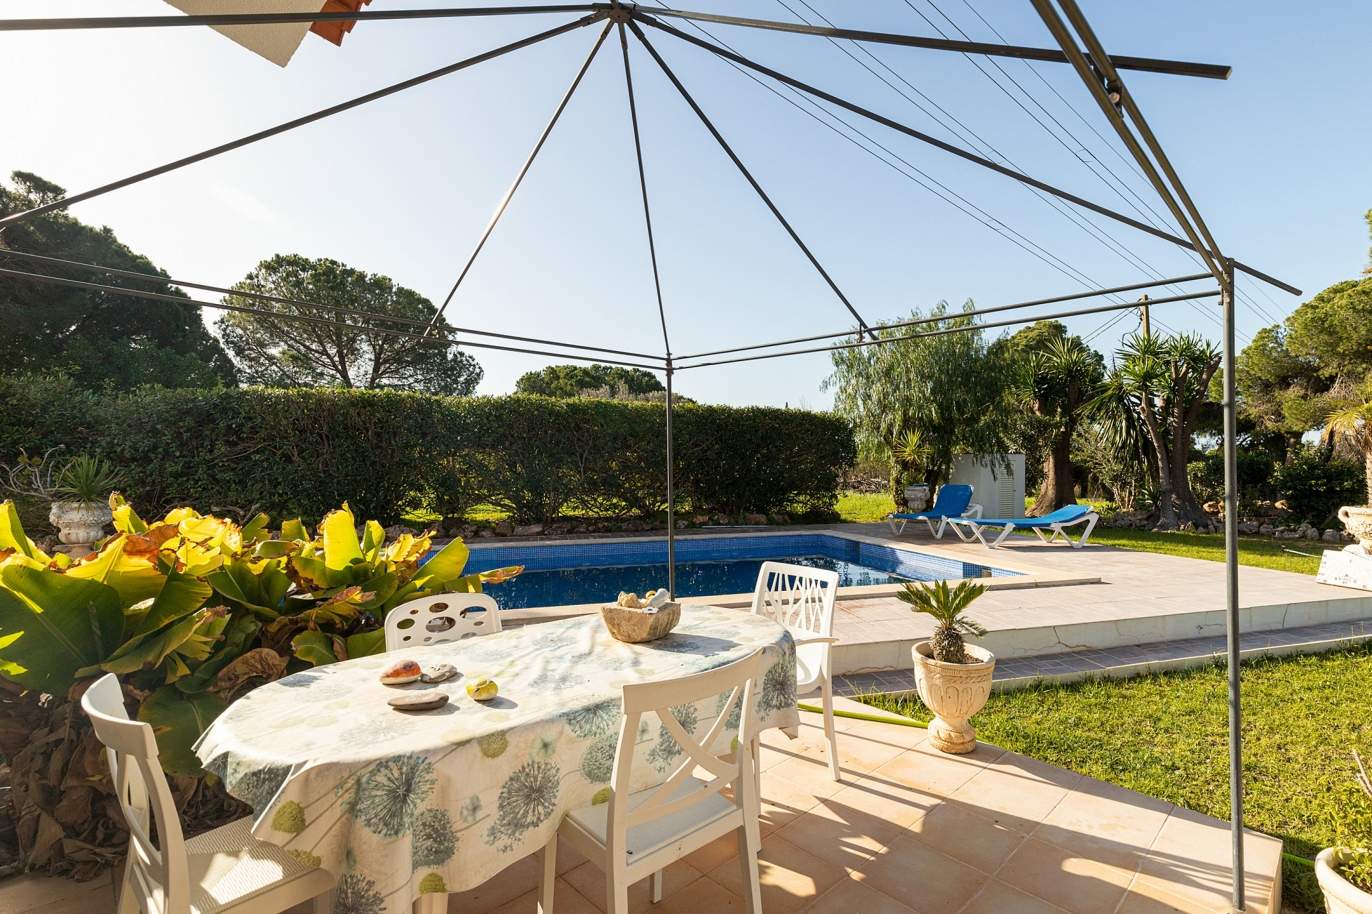 4 Bedroom Villa with swimming pool, for sale in Boliqueime - Algarve_192006